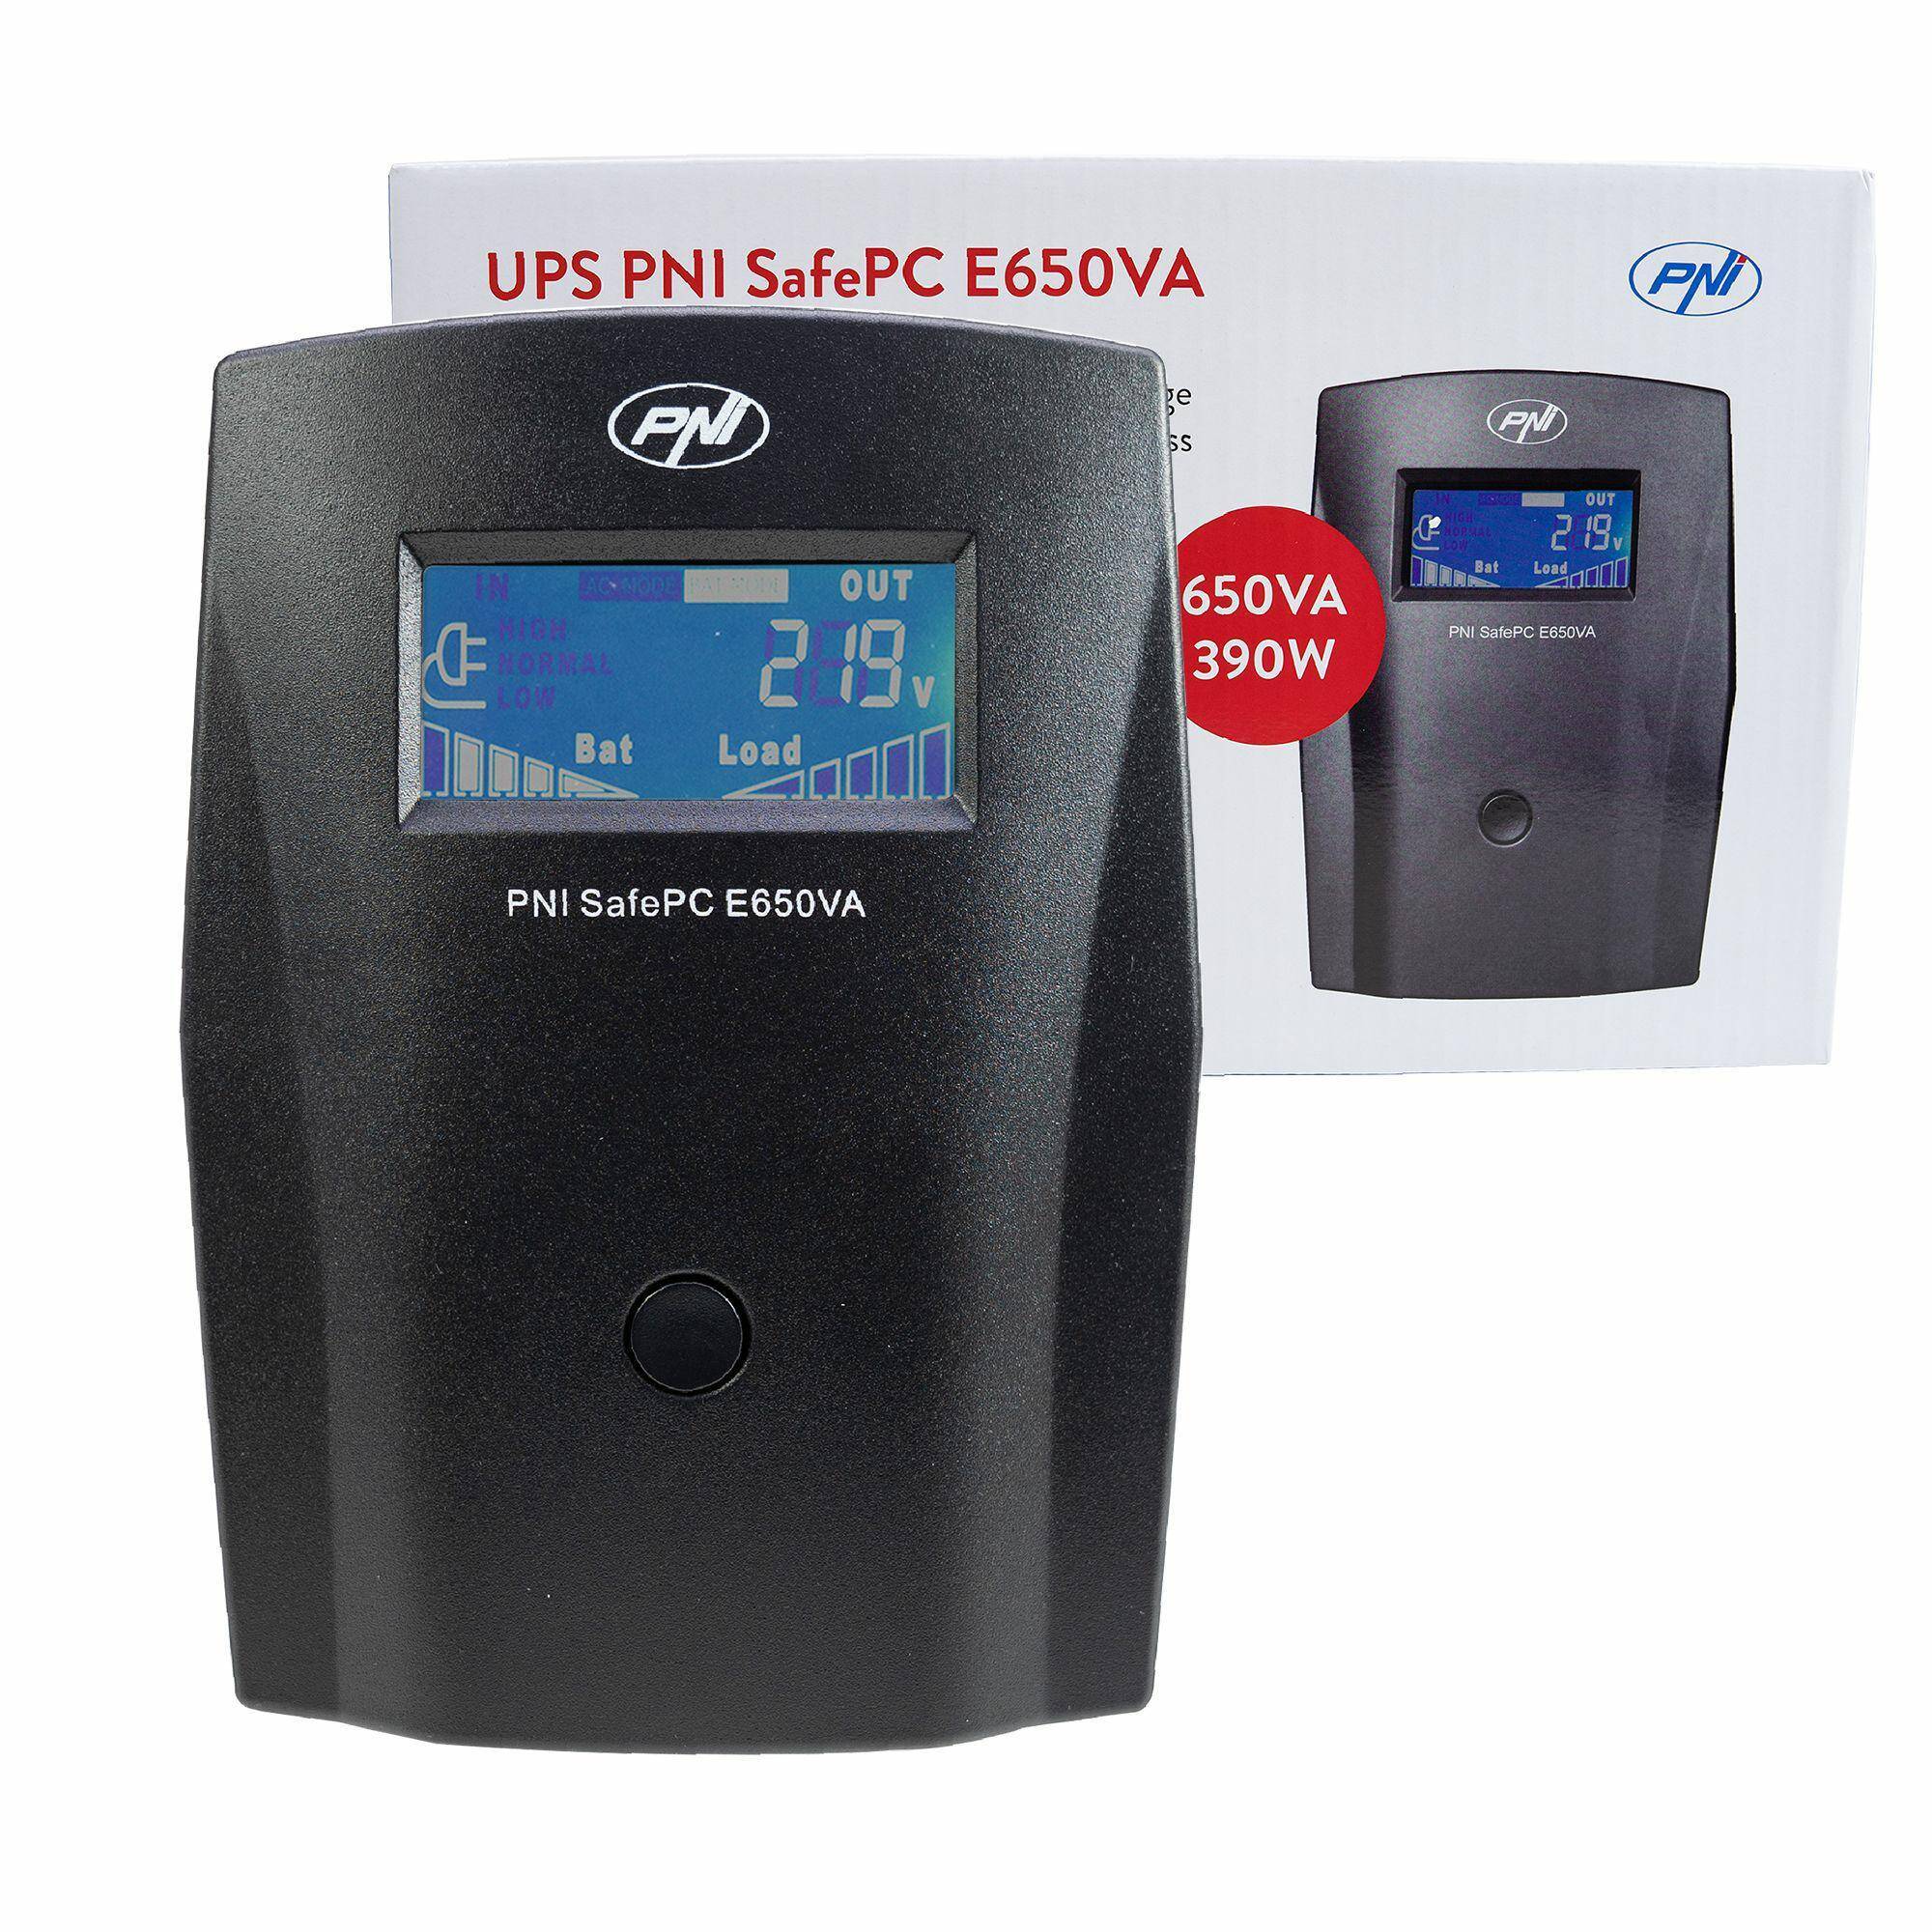 UPS PNI SafePC E650VA 390W, 1.8A